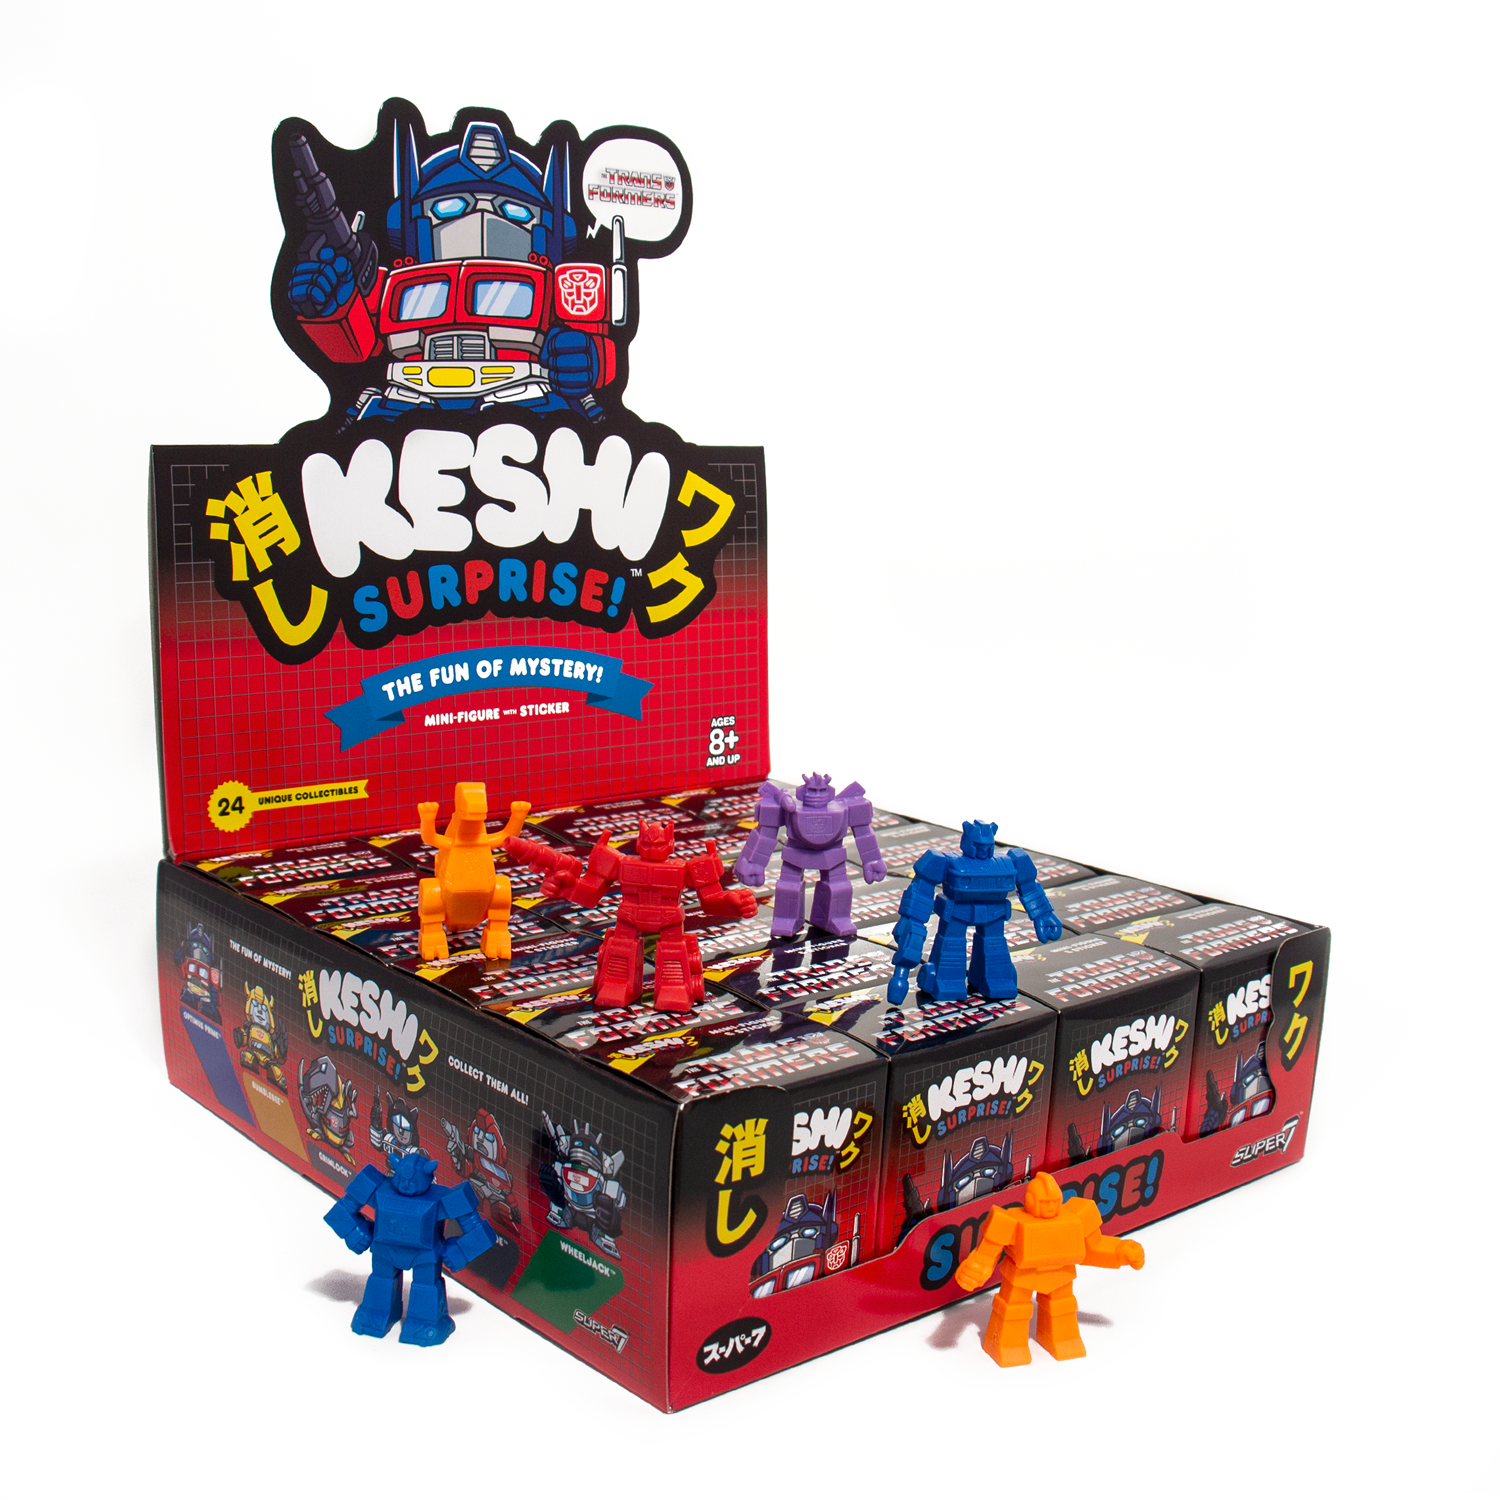 Transformers Keshi Surprise - Autobots